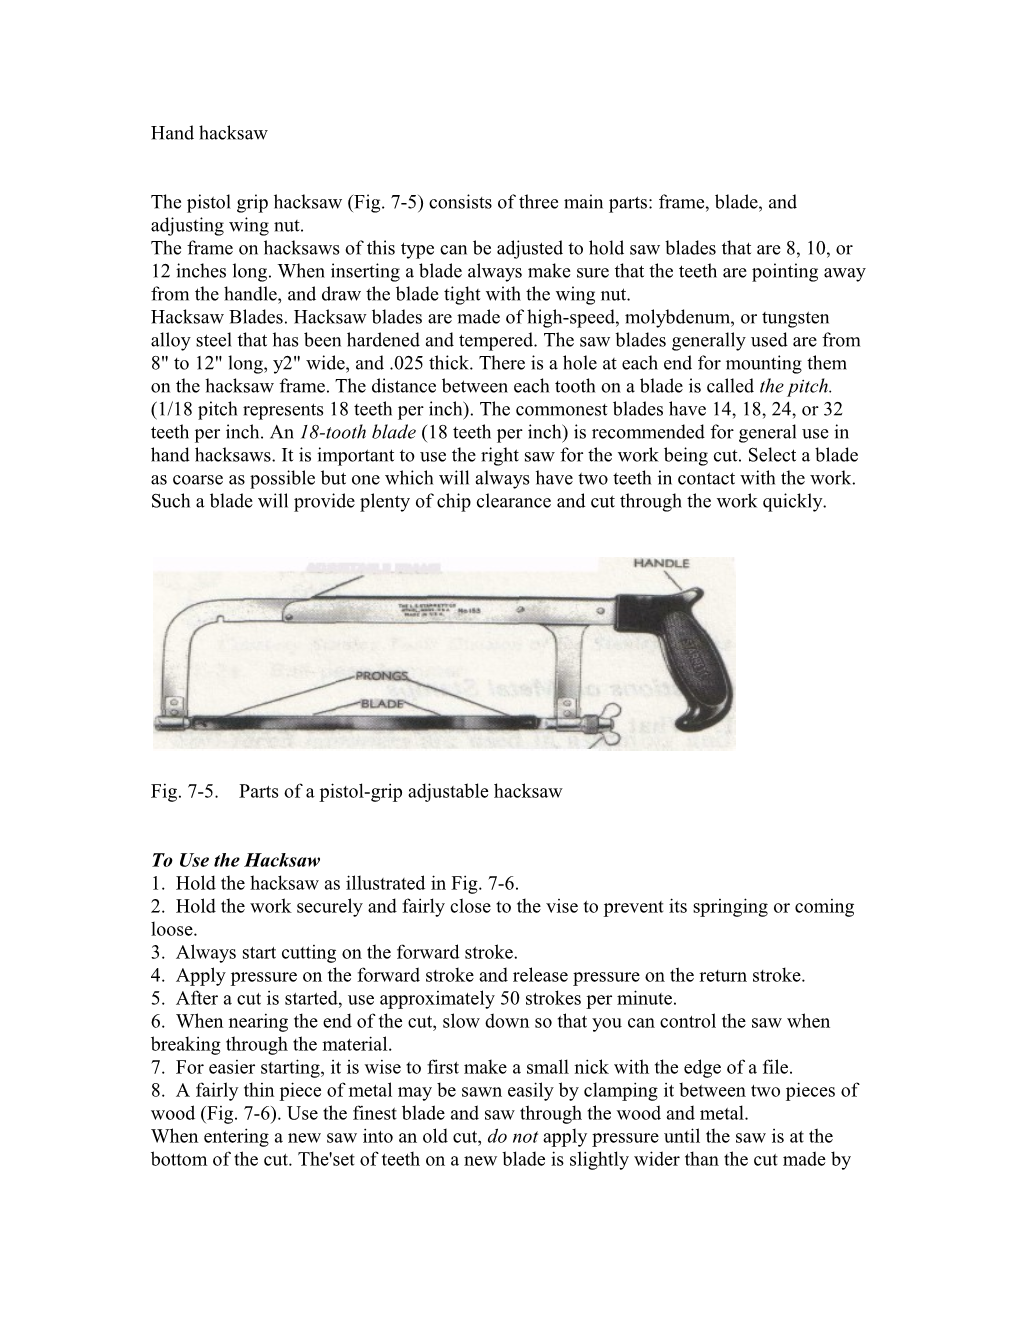 Fig. 7-5. Parts of a Pistol-Grip Adjustable Hacksaw